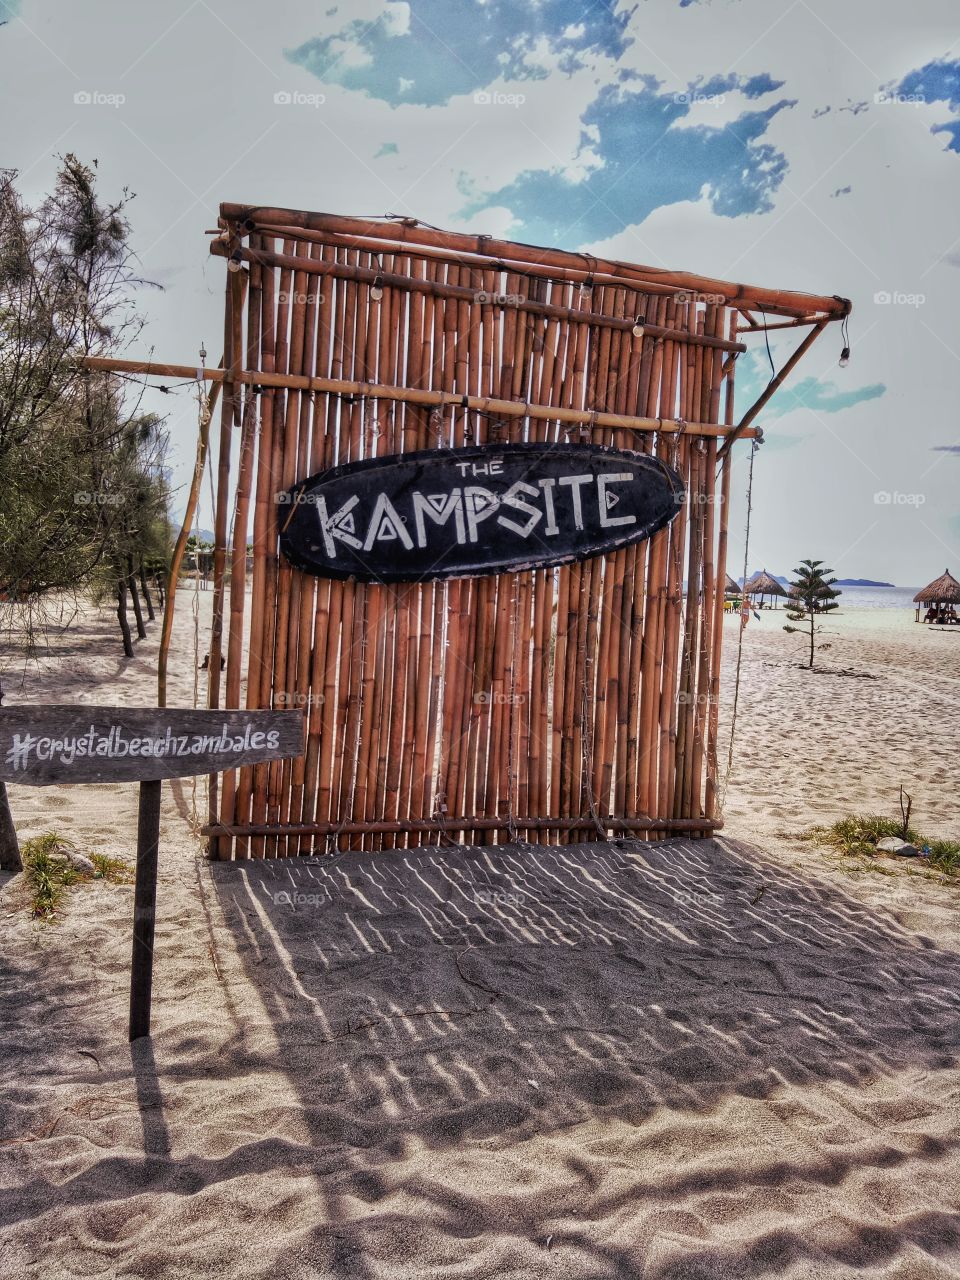 The Kampsite